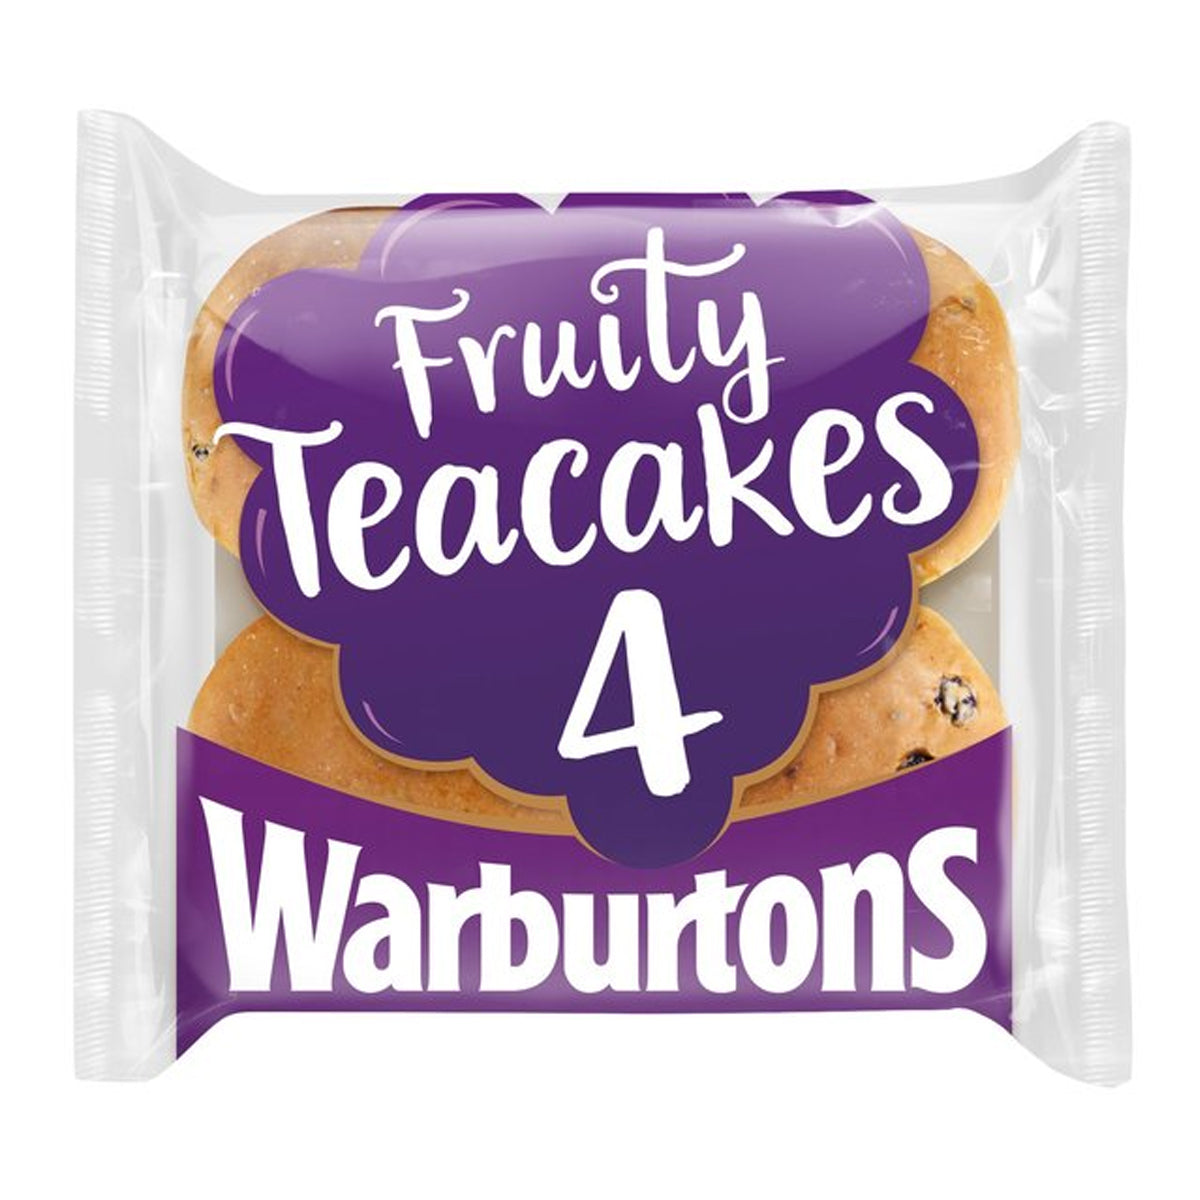 Warburtons - Fruity Teacake - 4 Pack.